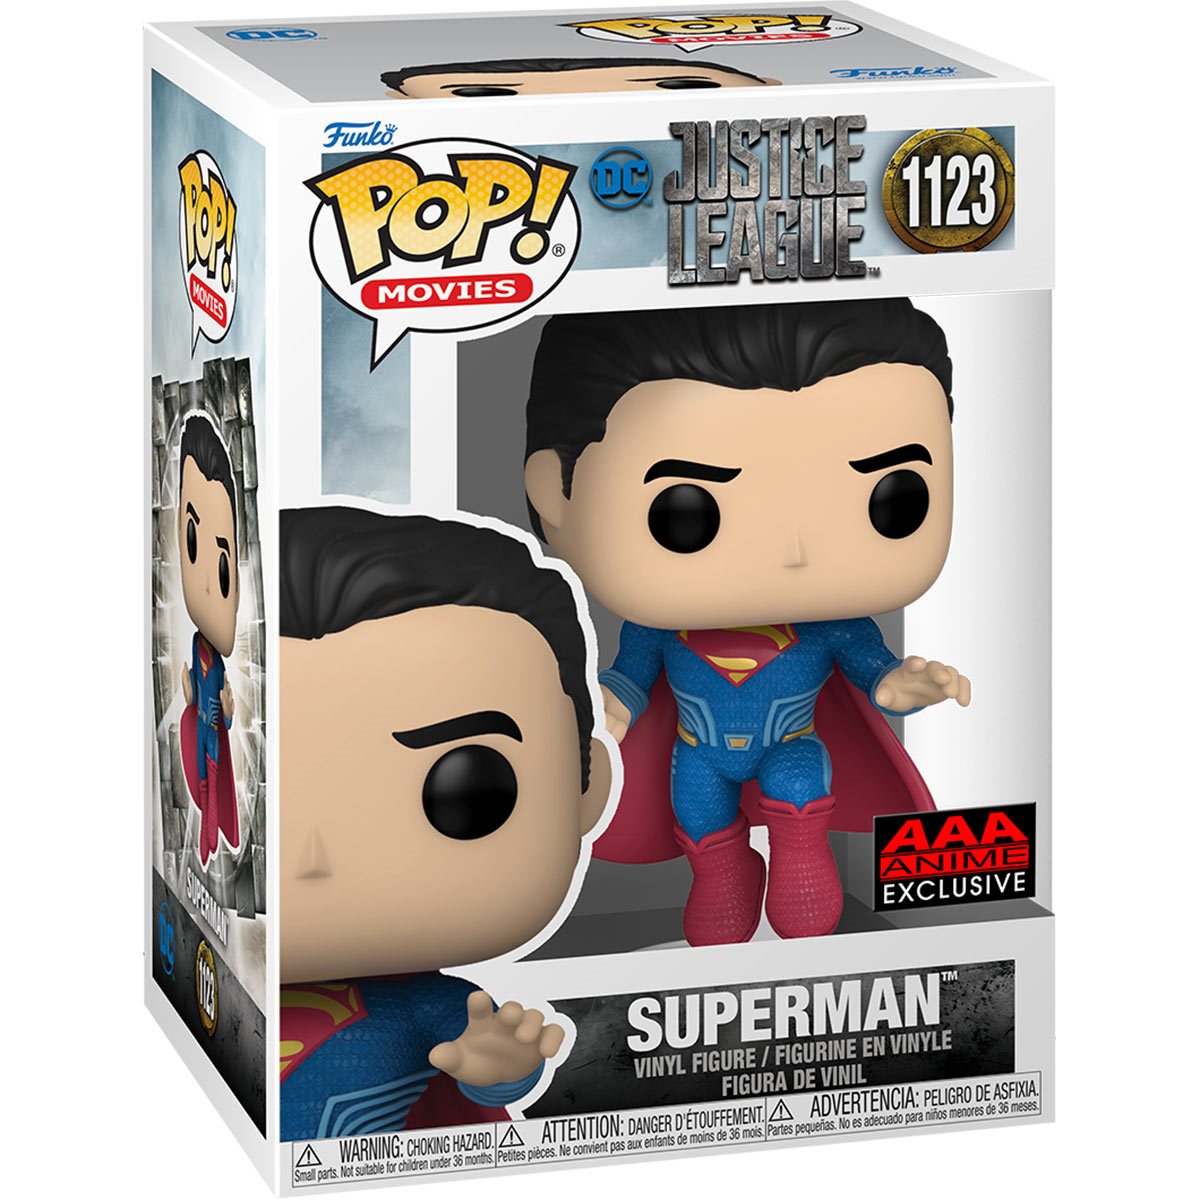 Superman 1123 AAA Exclusive - Funko Pop! Movies